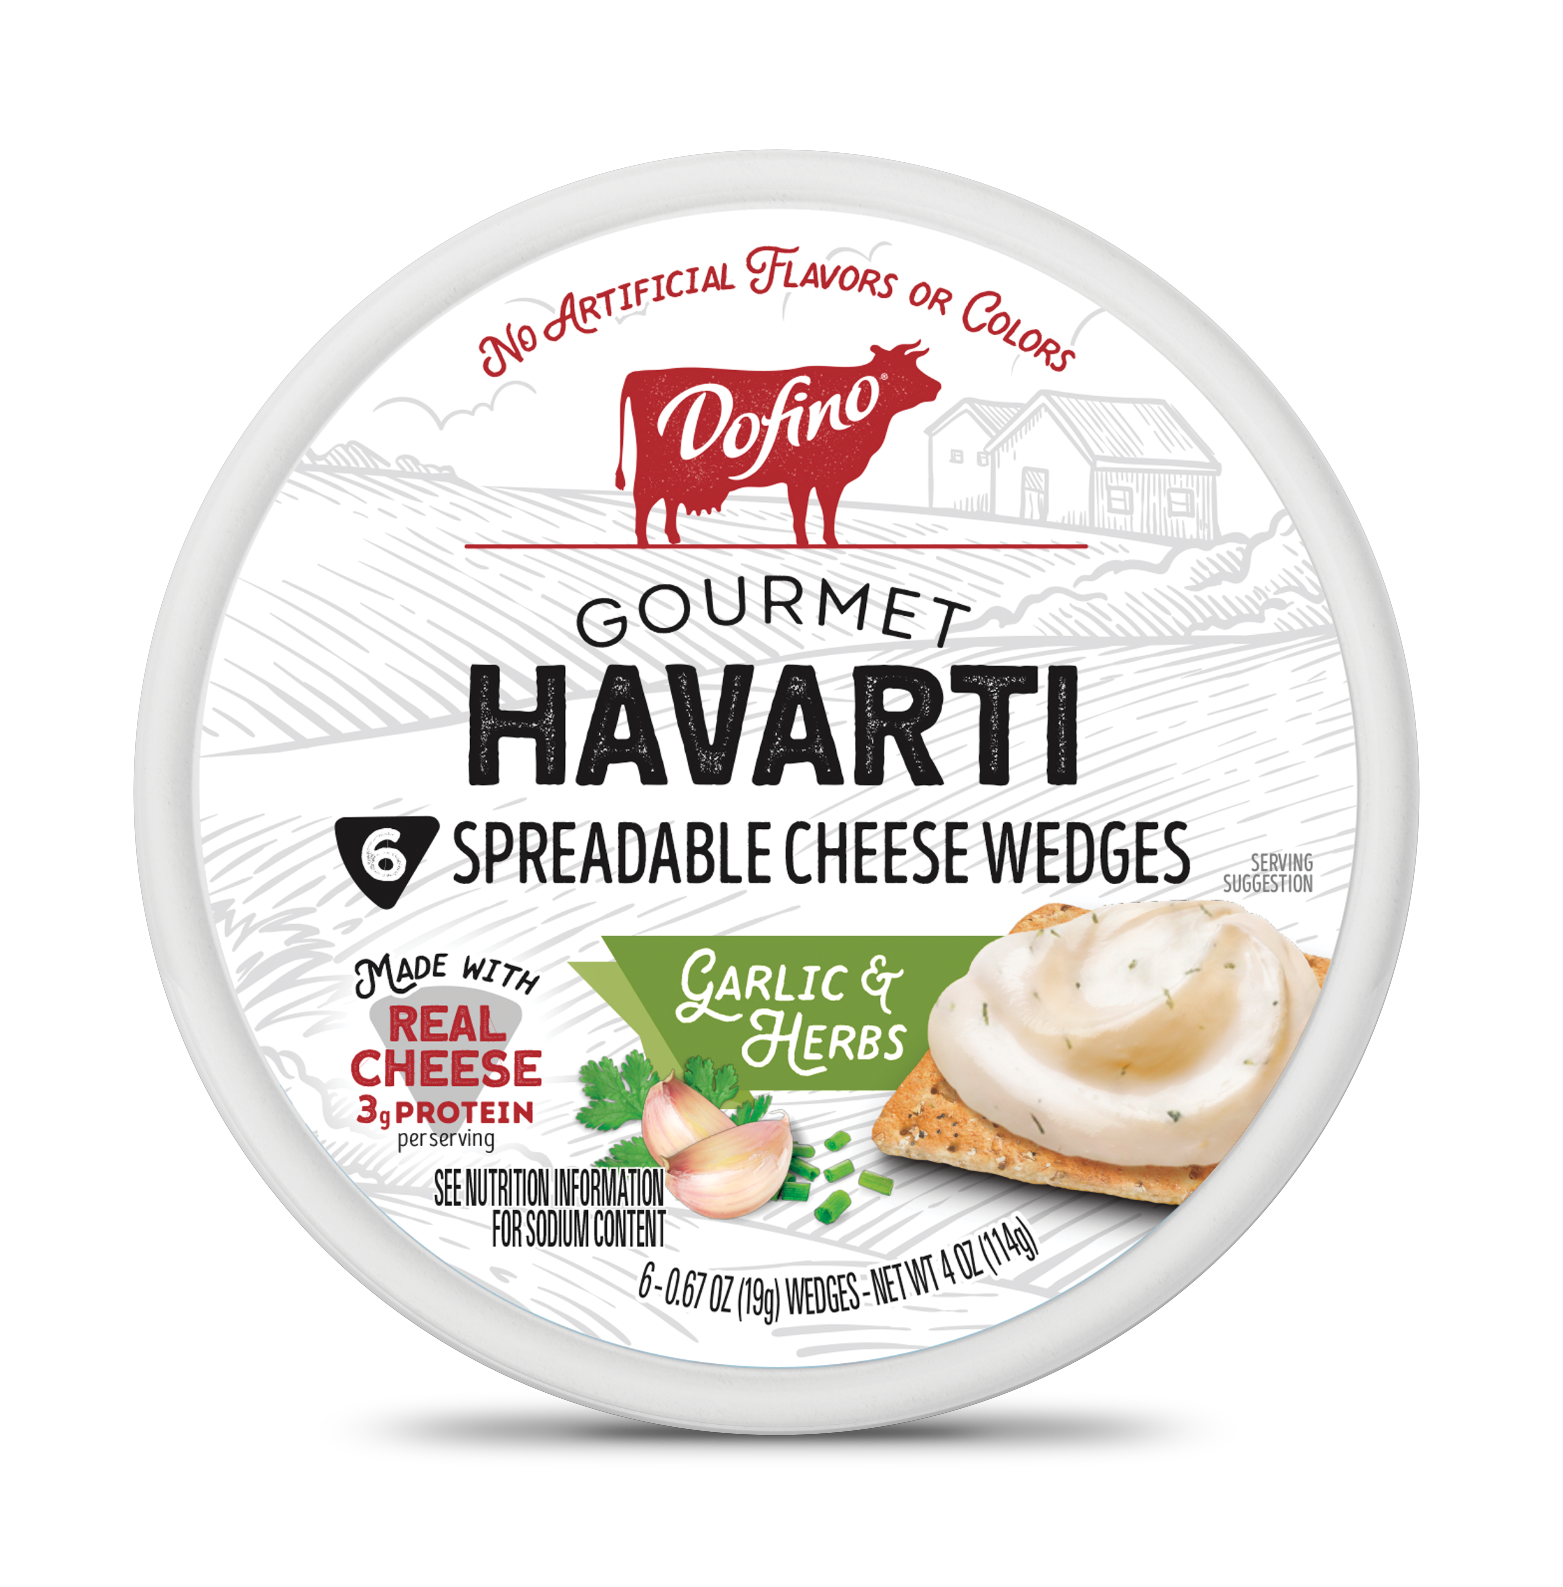 Dofino Garlic & Herbs Havarti Gourmet Spreadable Cheese Wedges